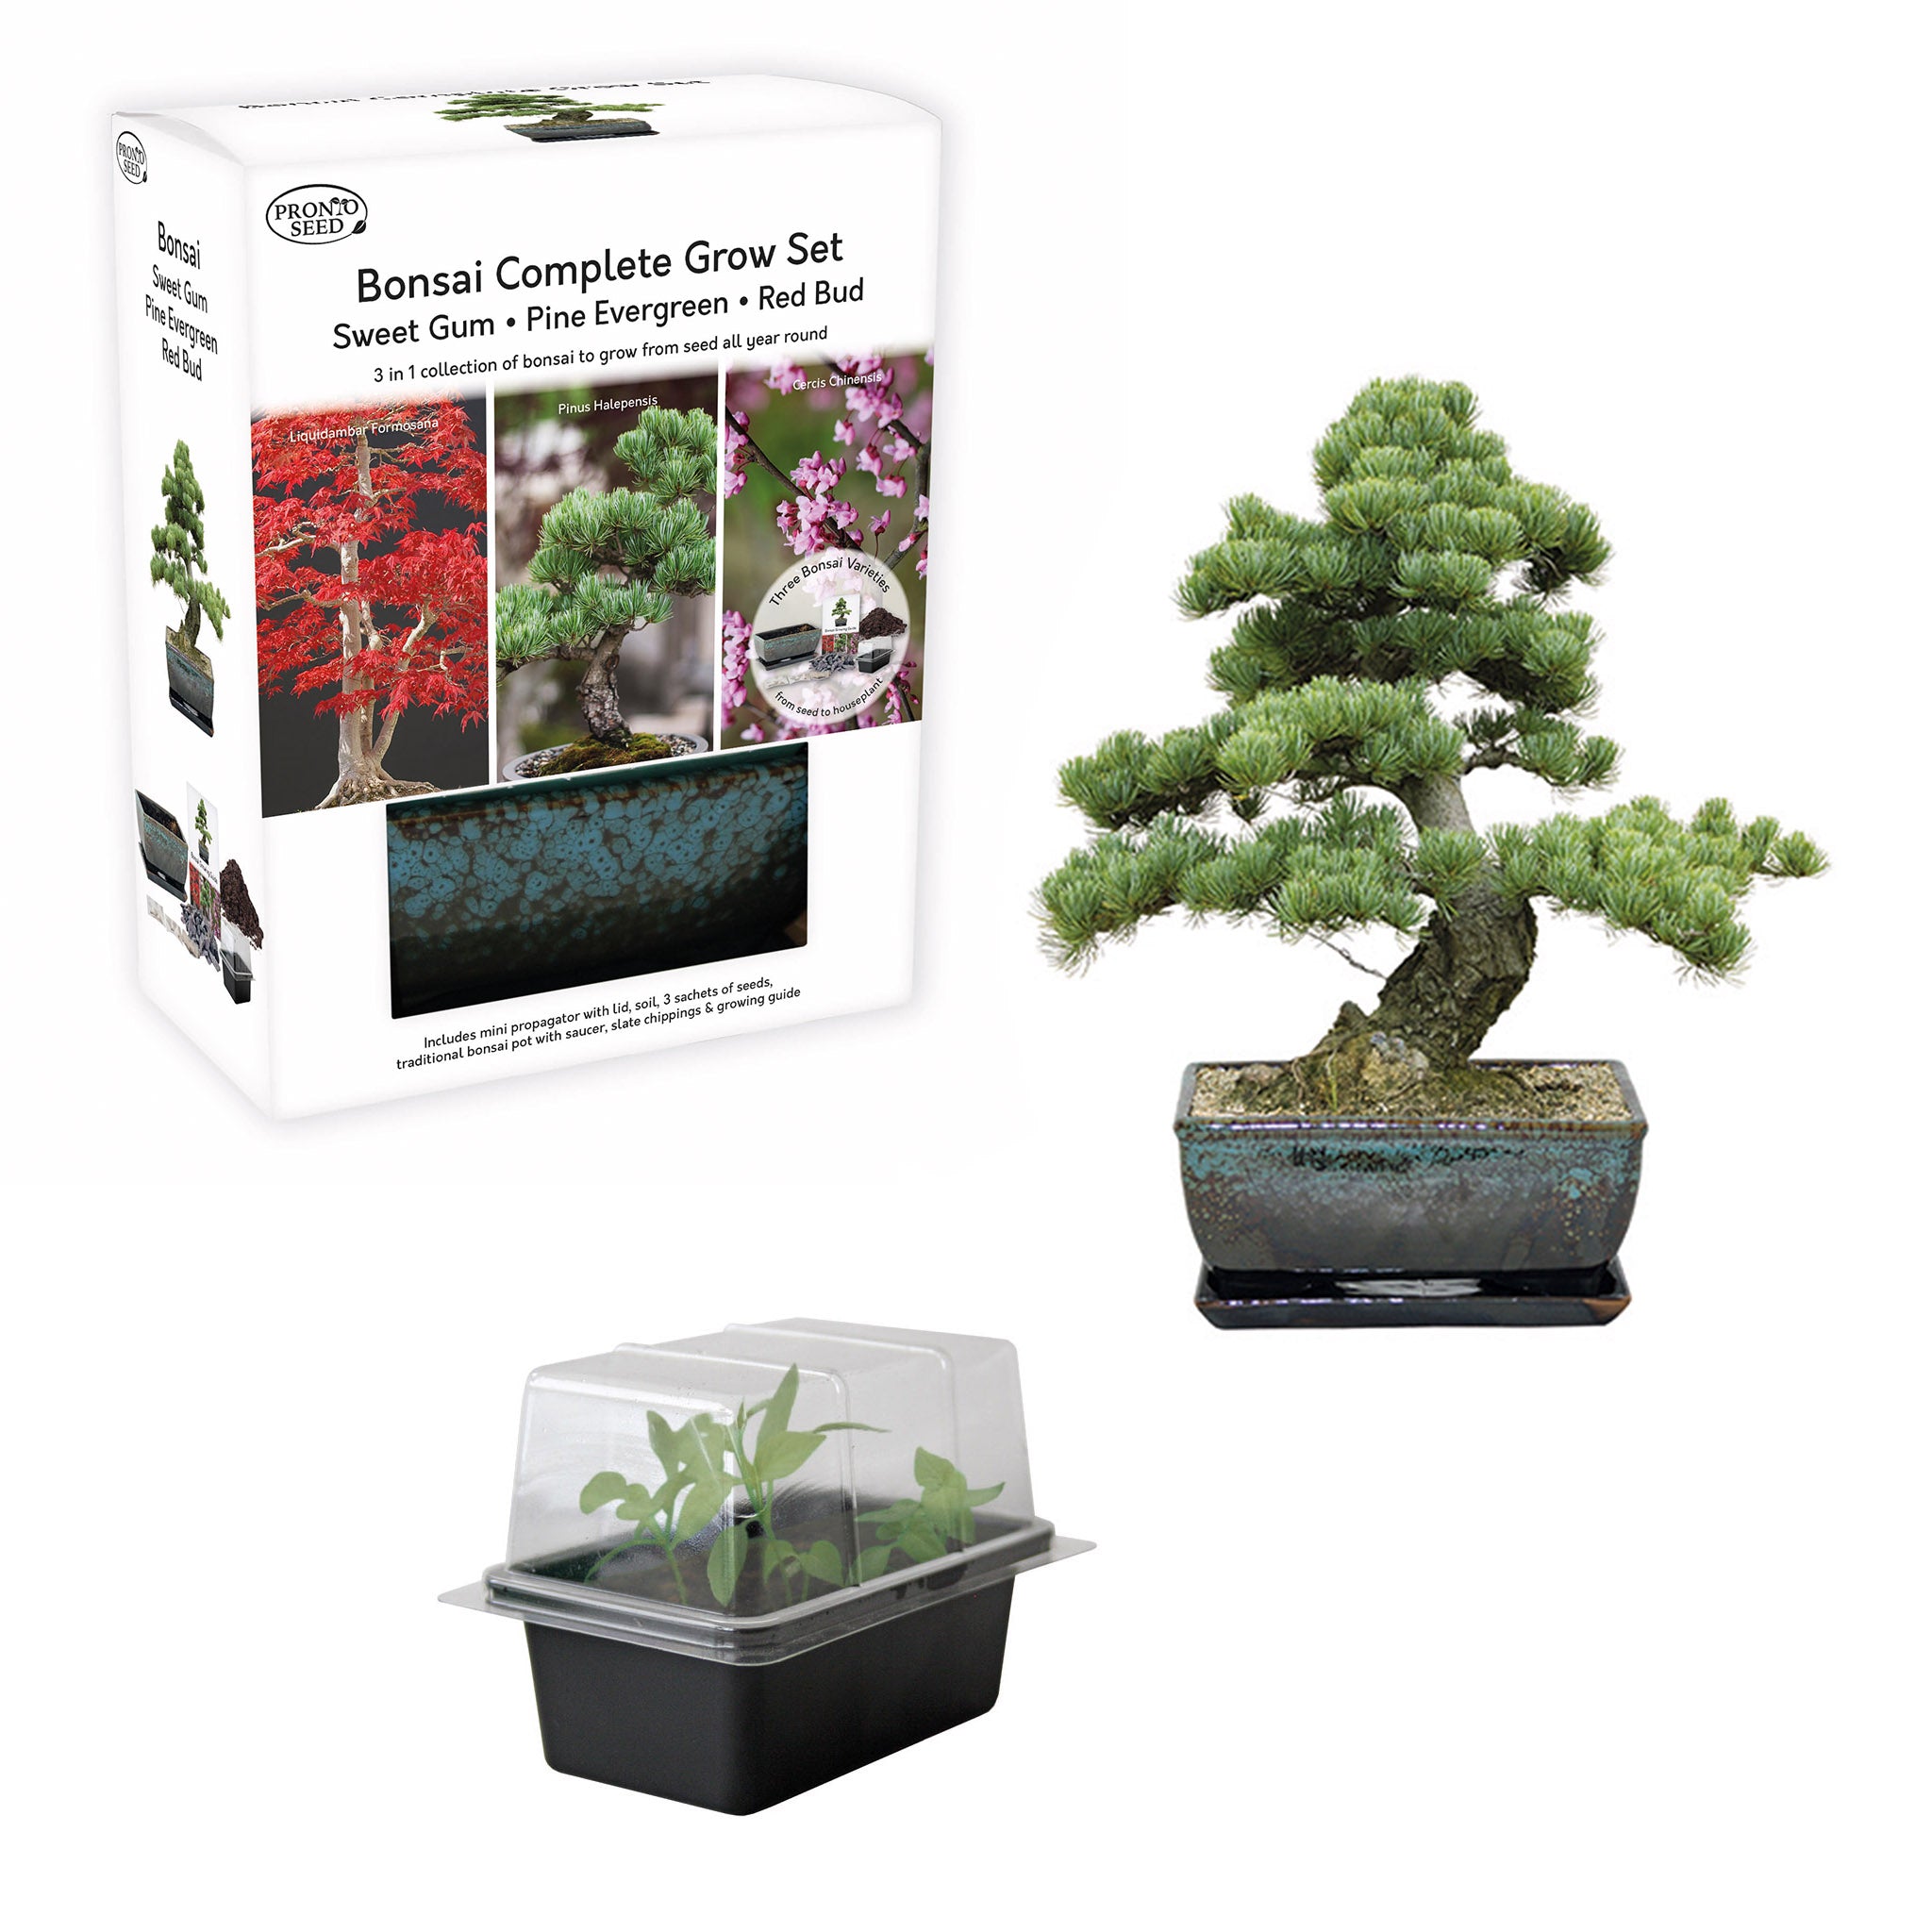 Bonsai Tree Starter Kit with Traditional Glazed Planter – Pronto Seed